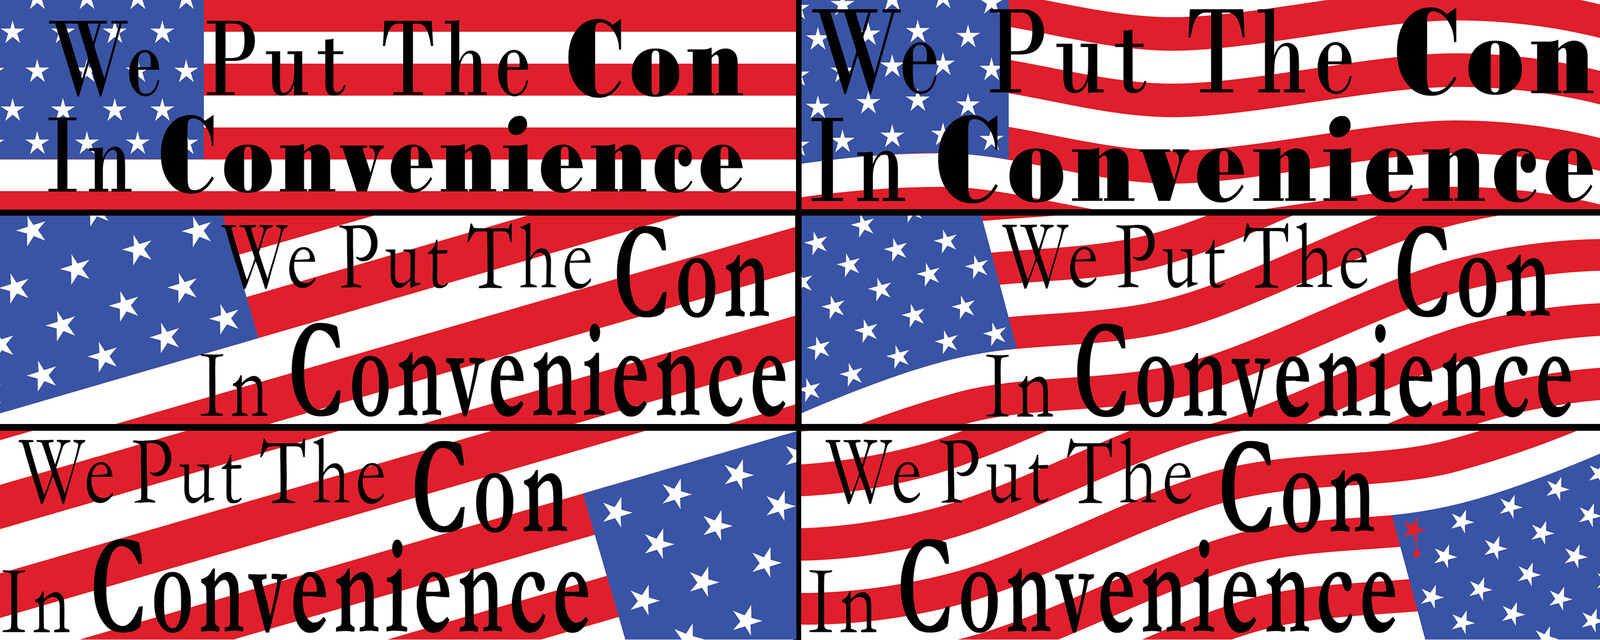 "Con in Convenience" Sticker (all v1 variations)